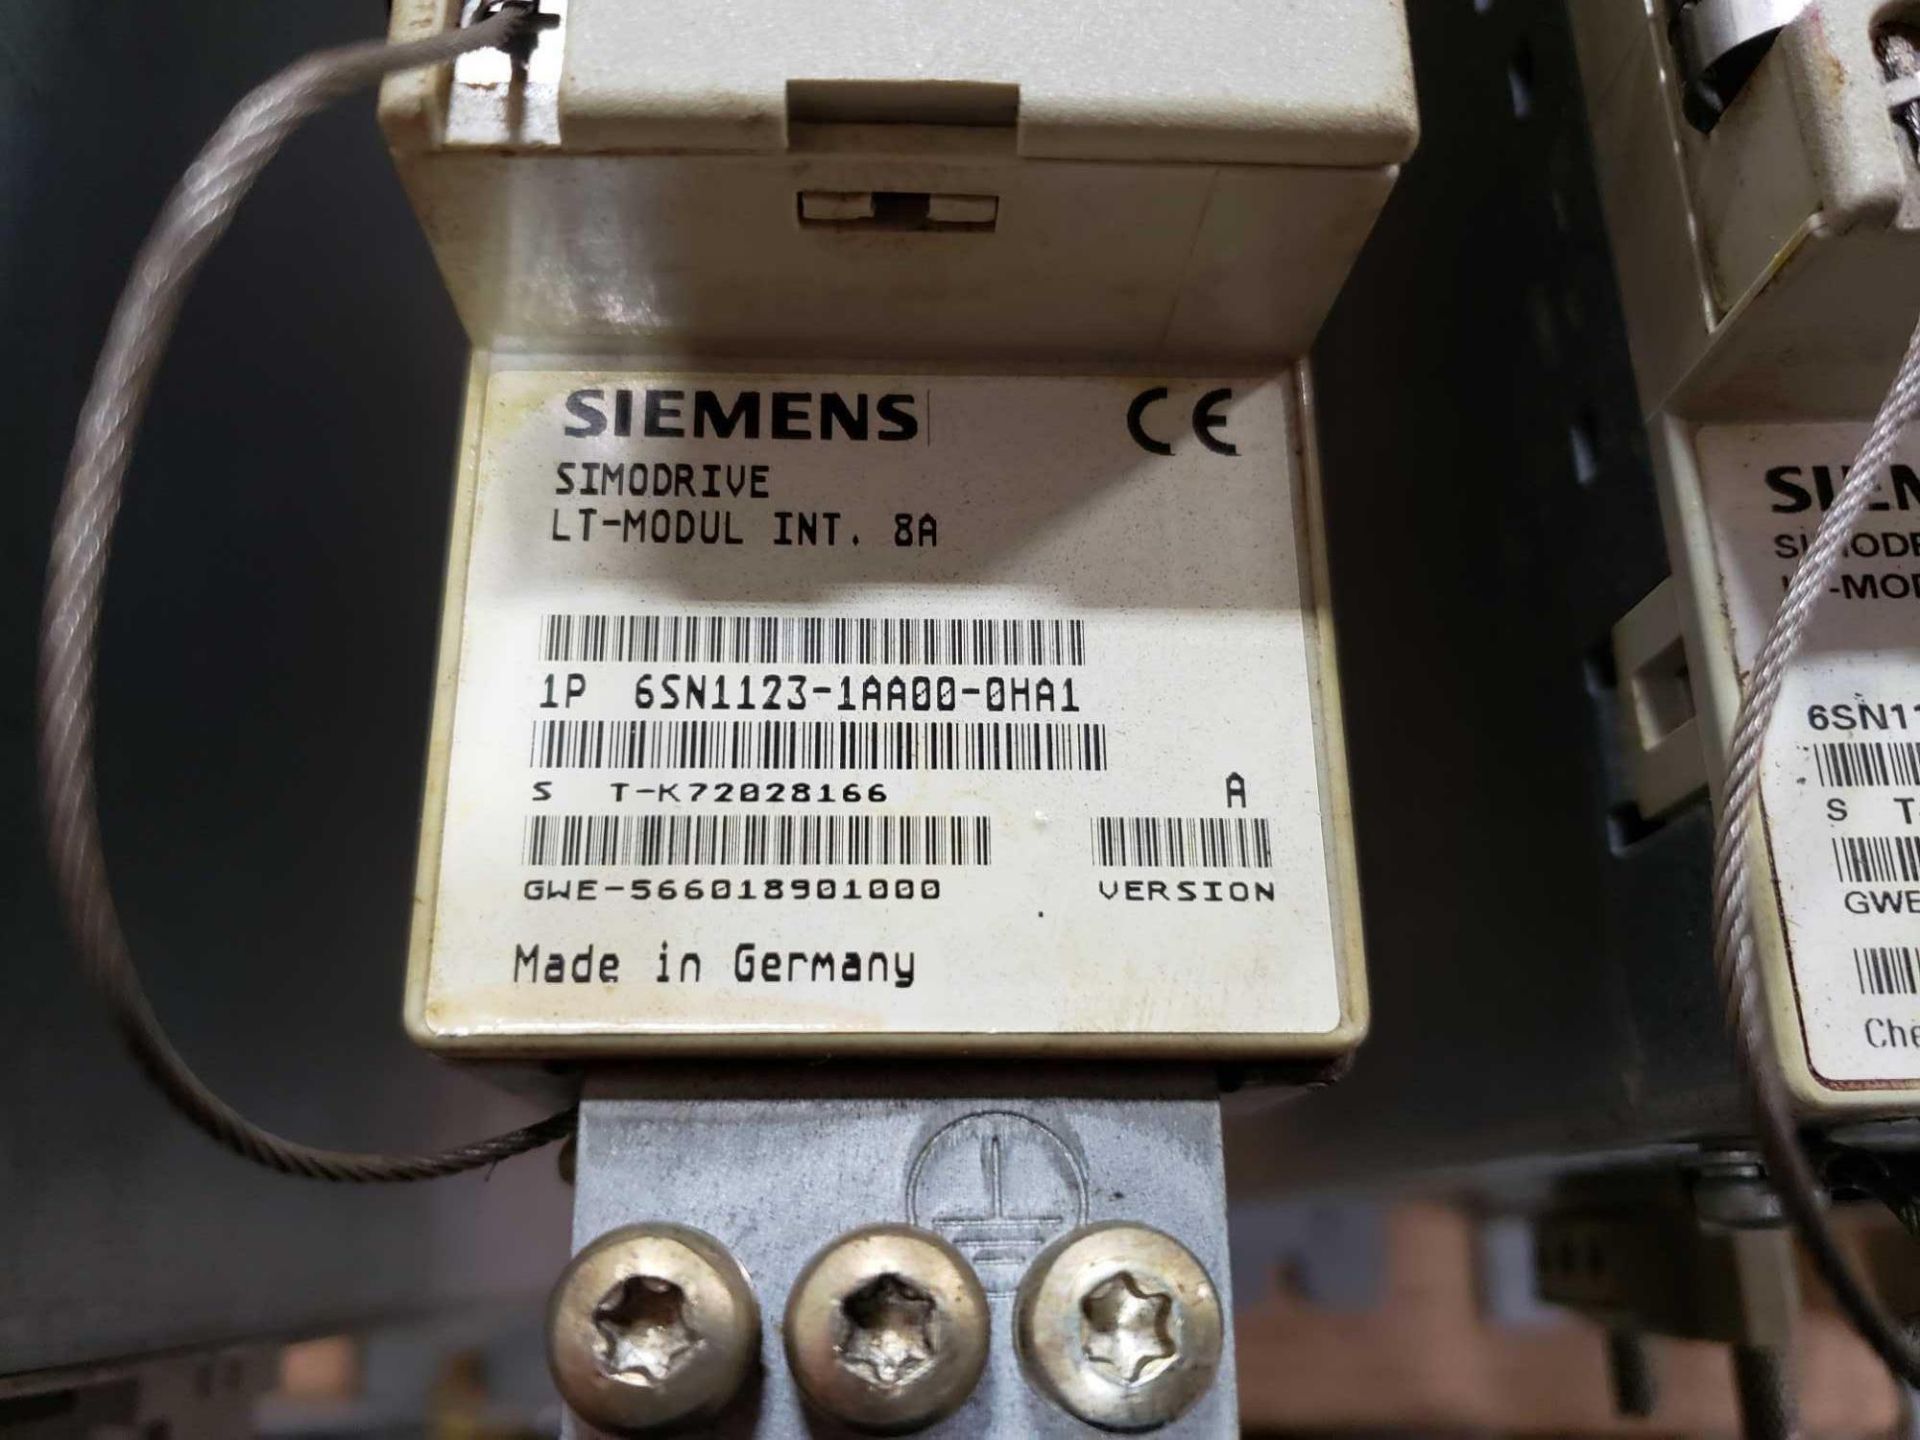 Siemens Simodrive LT-Modul Int. model 6SN1123-1AA00-0HA1. - Image 2 of 2